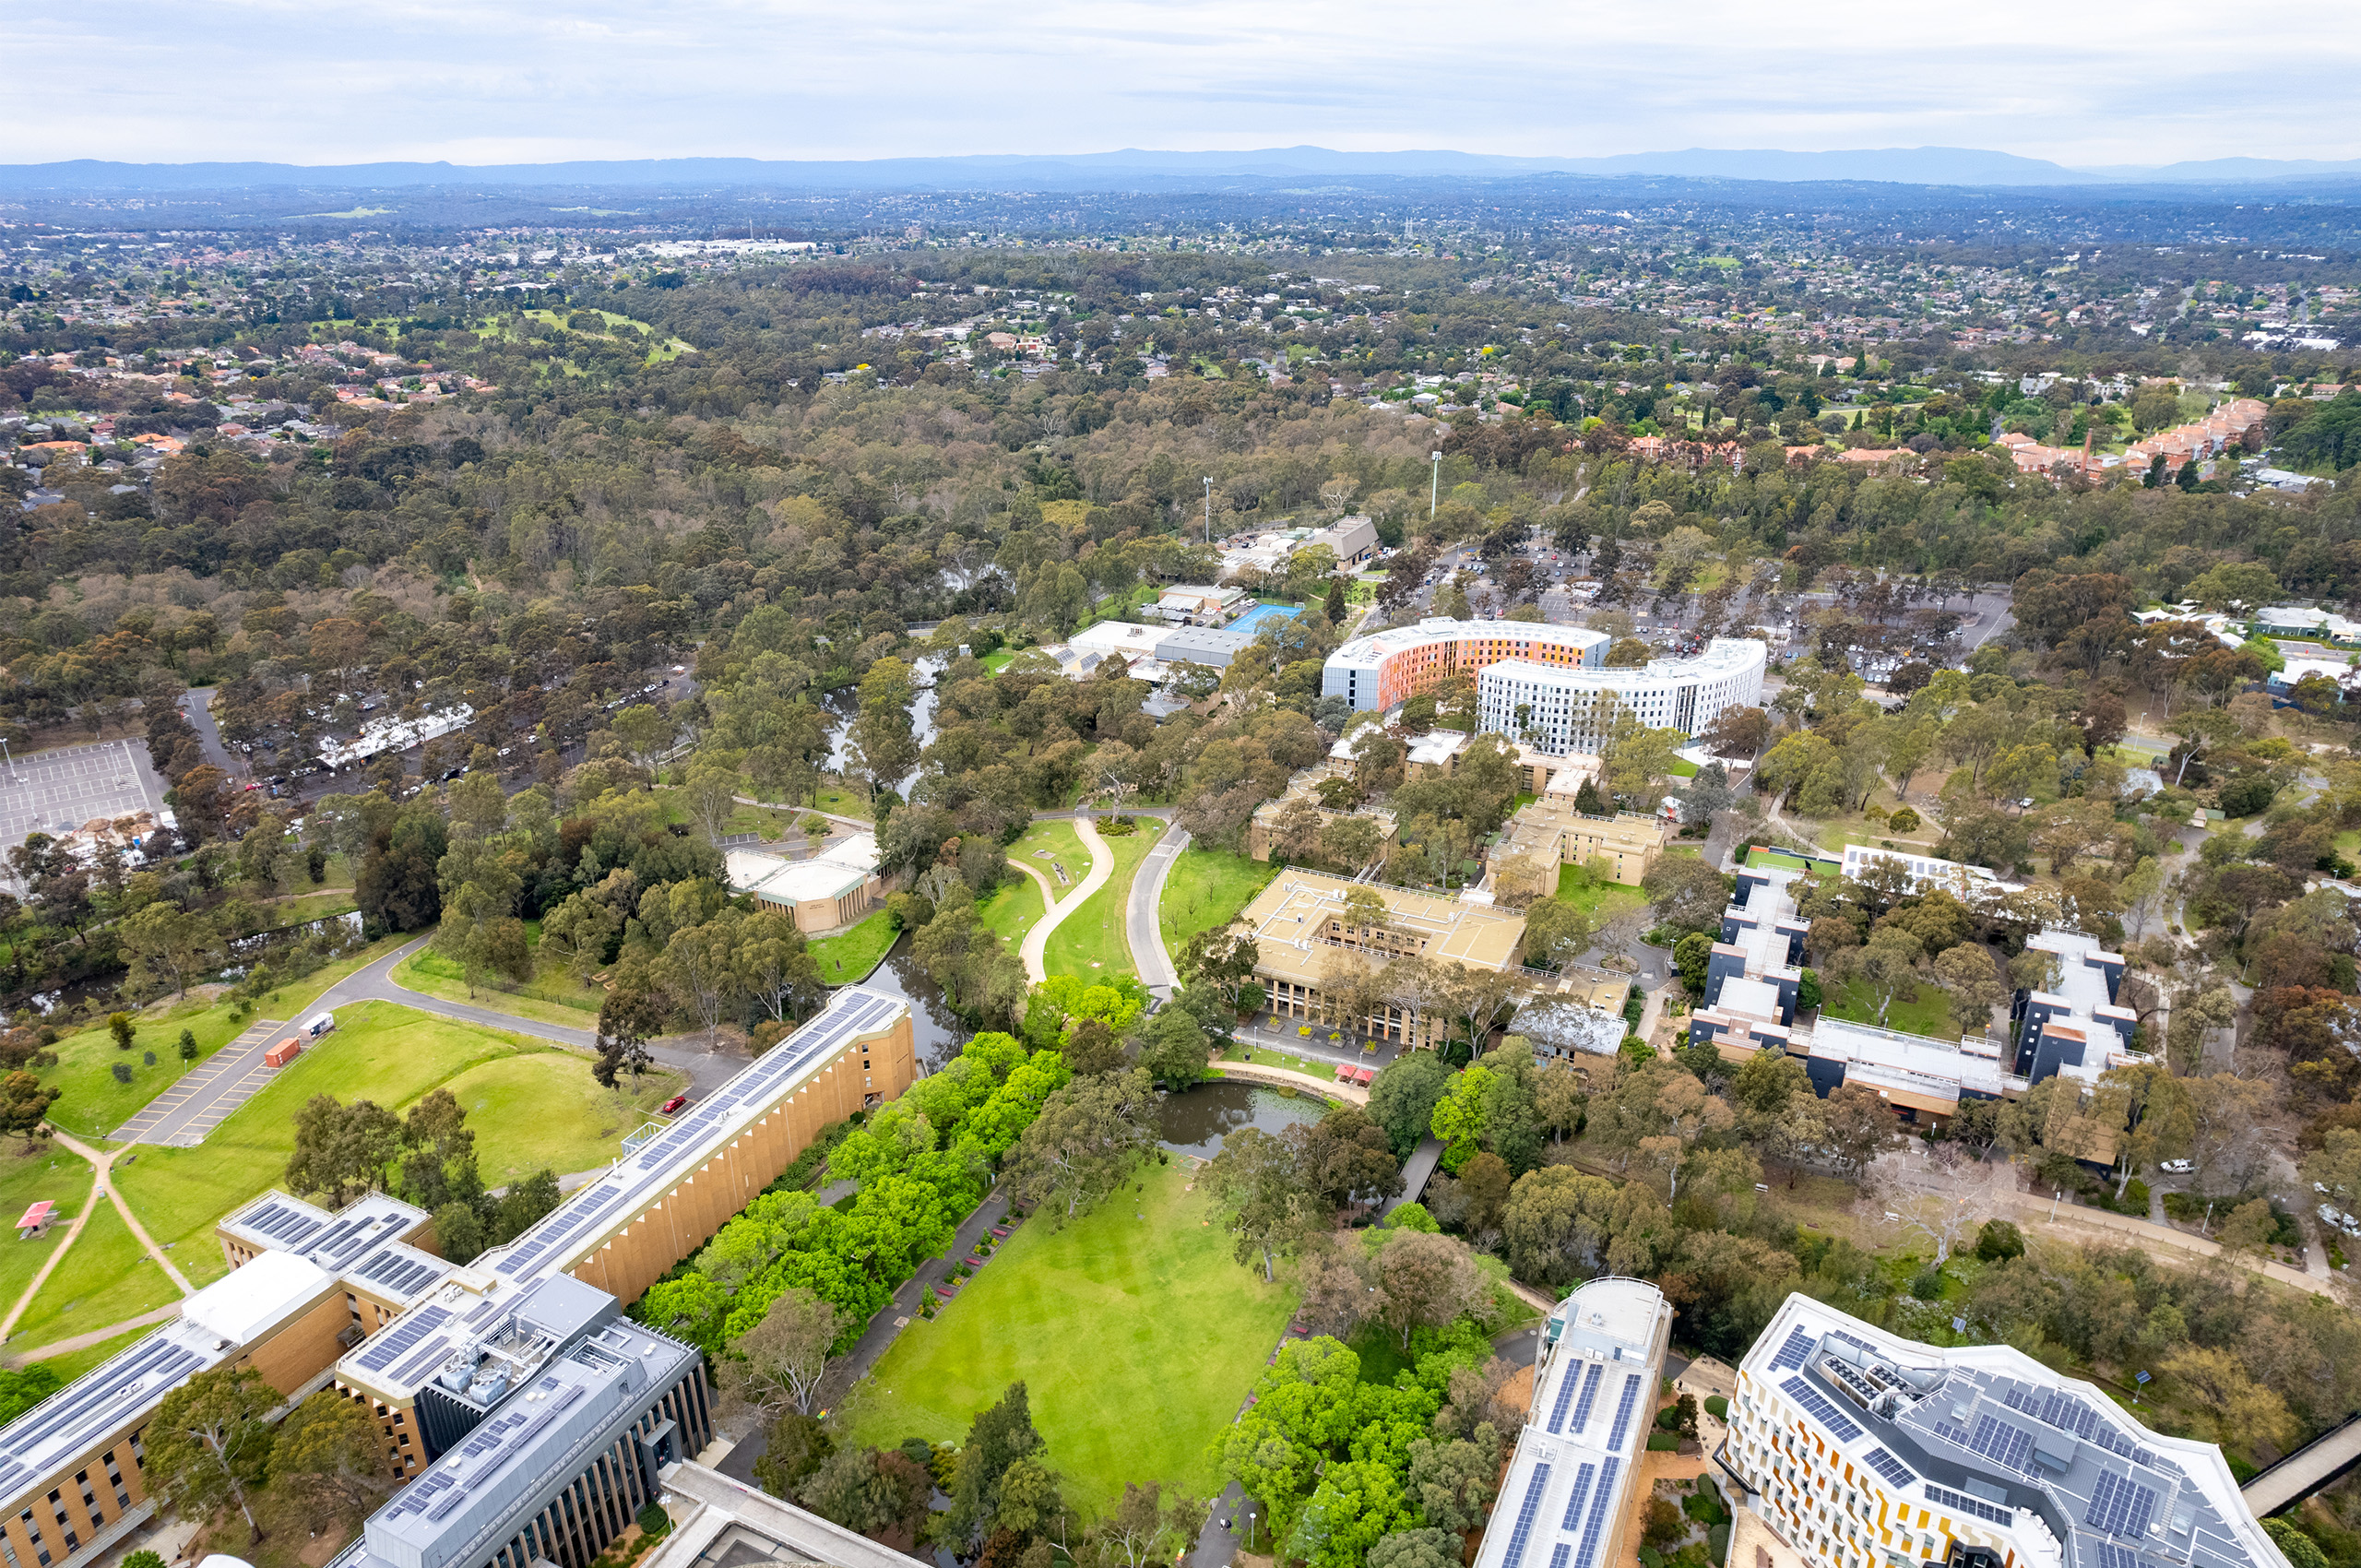 Bundoora campus from above